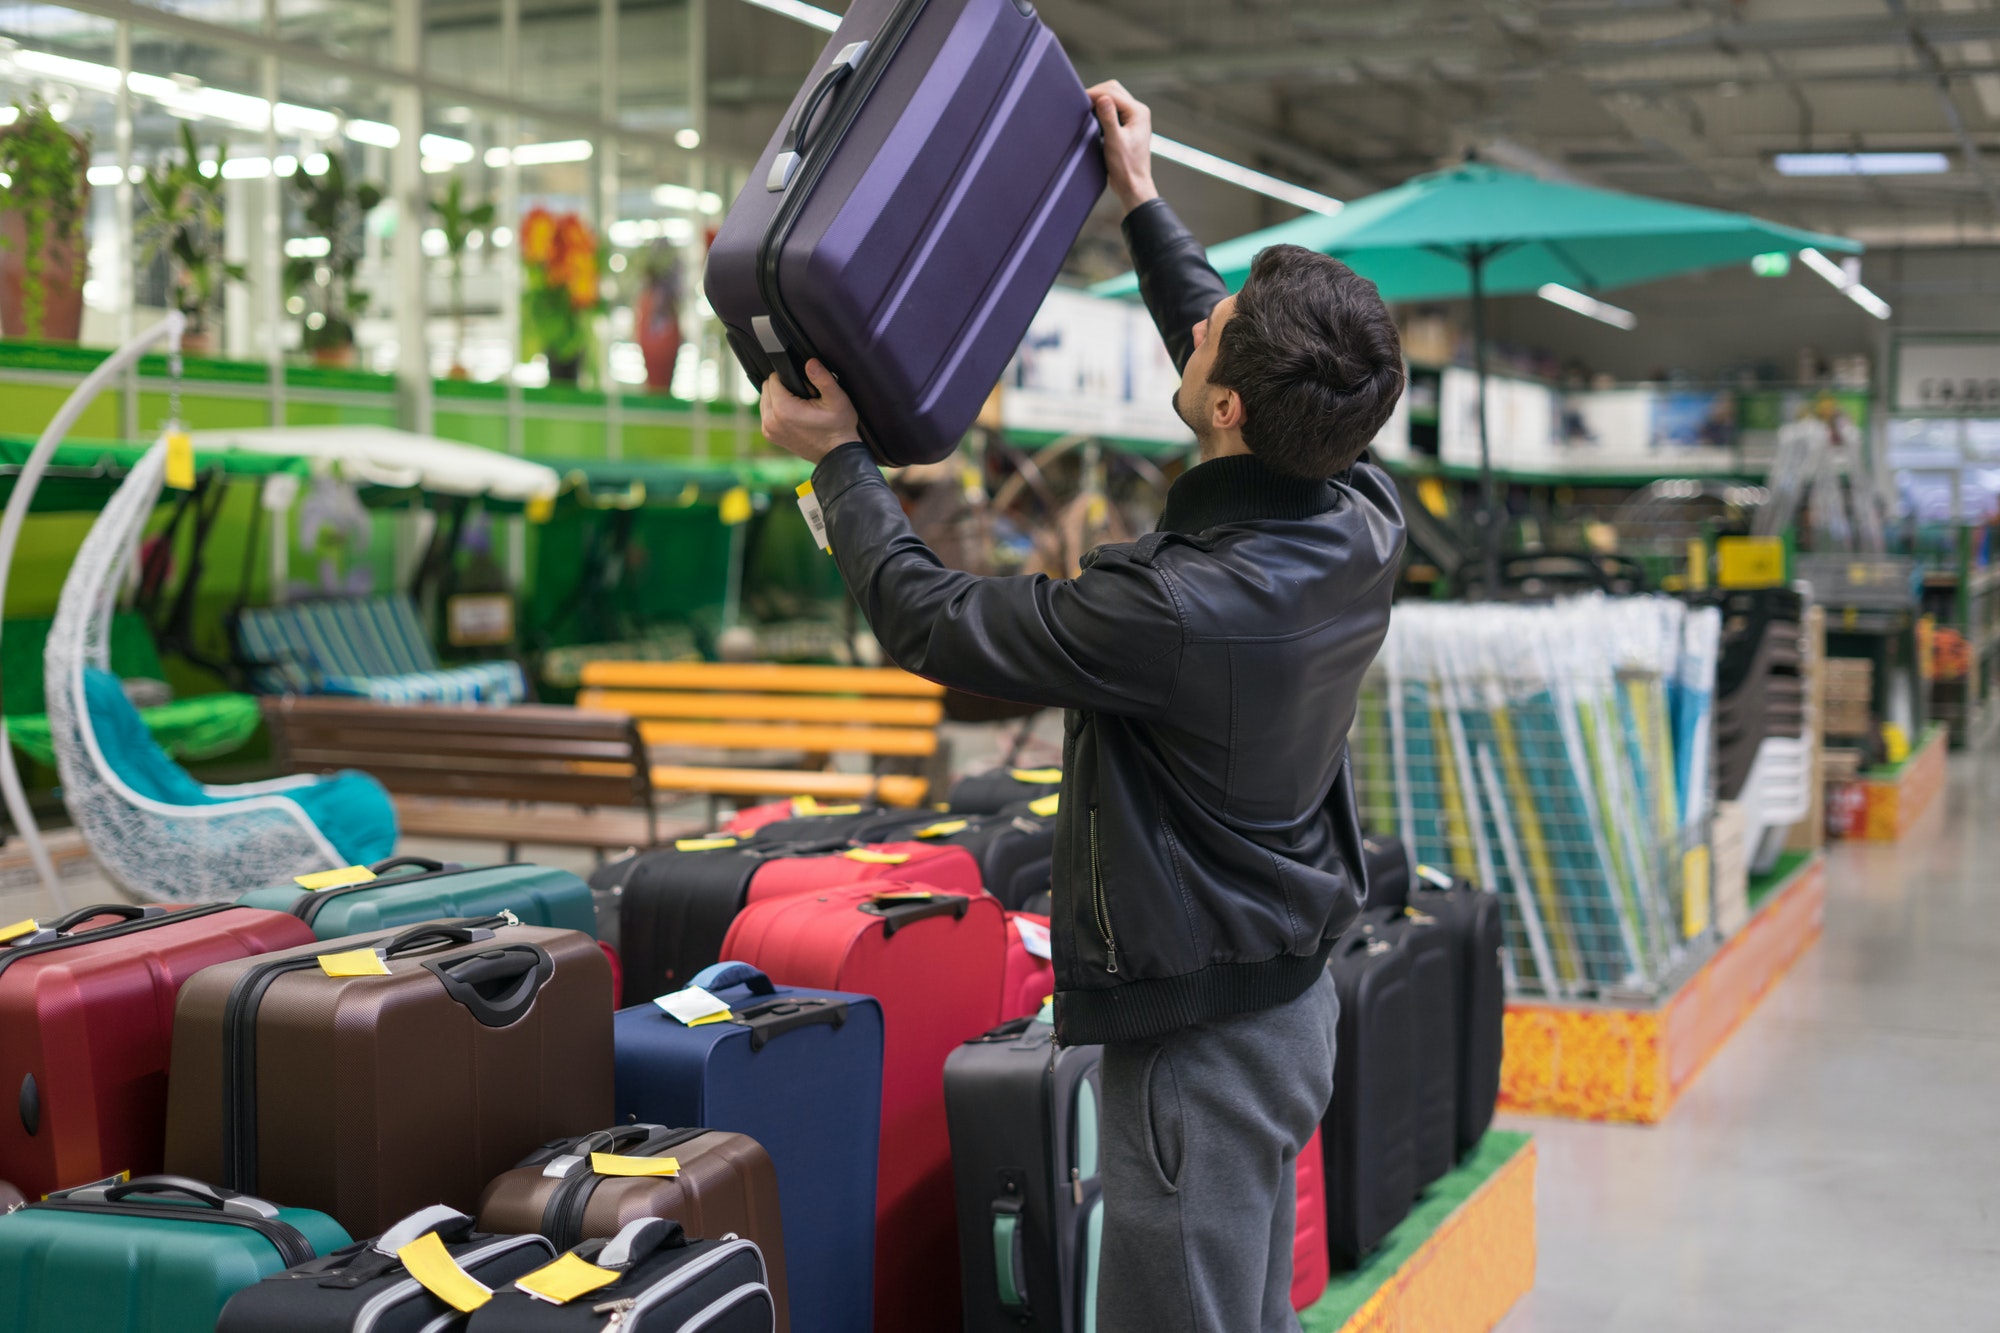 male customer choosing travel suitcase